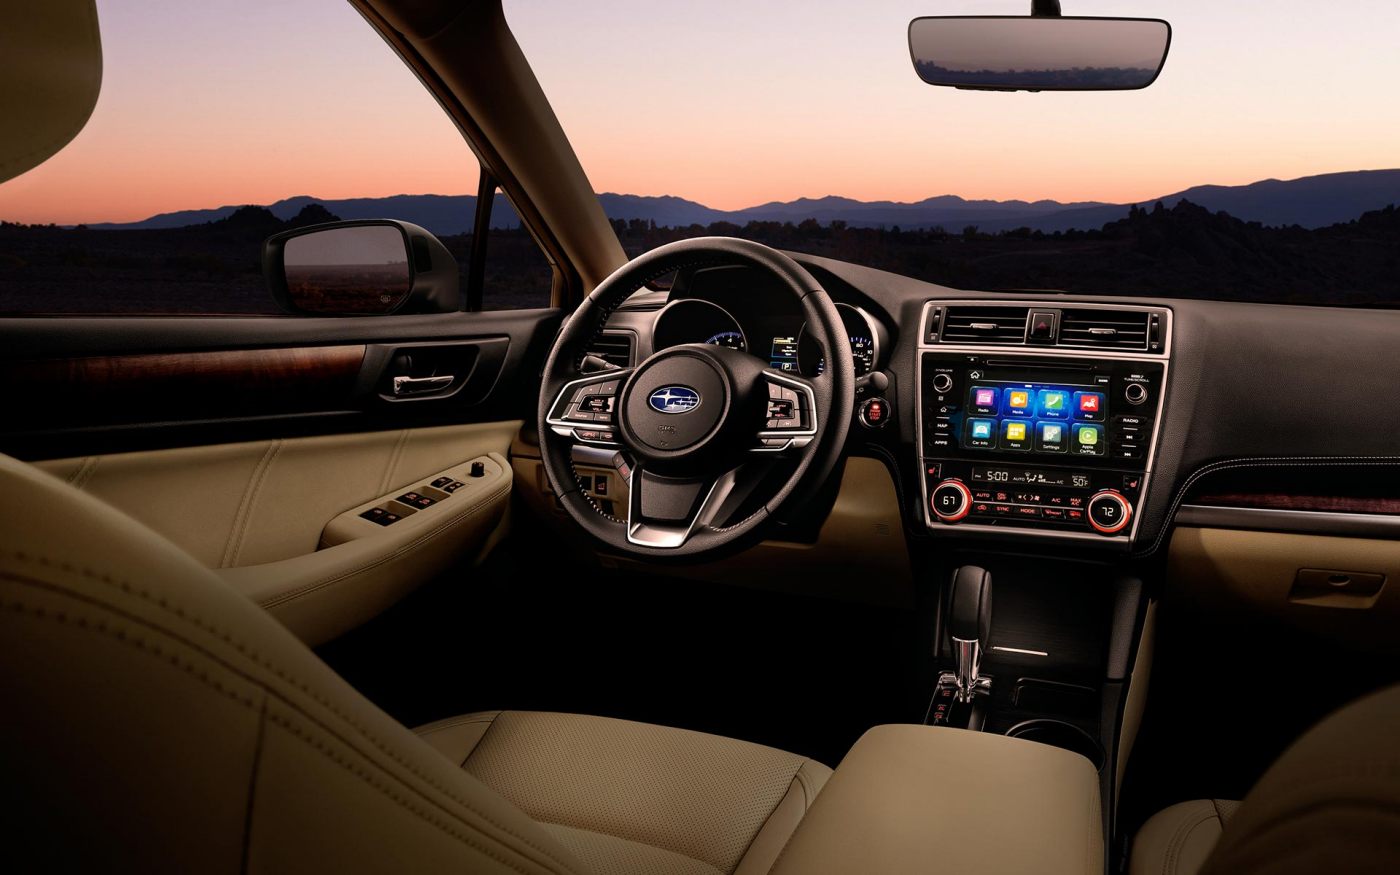 New 2018 Subaru Outback Spacious, Upgraded Interior